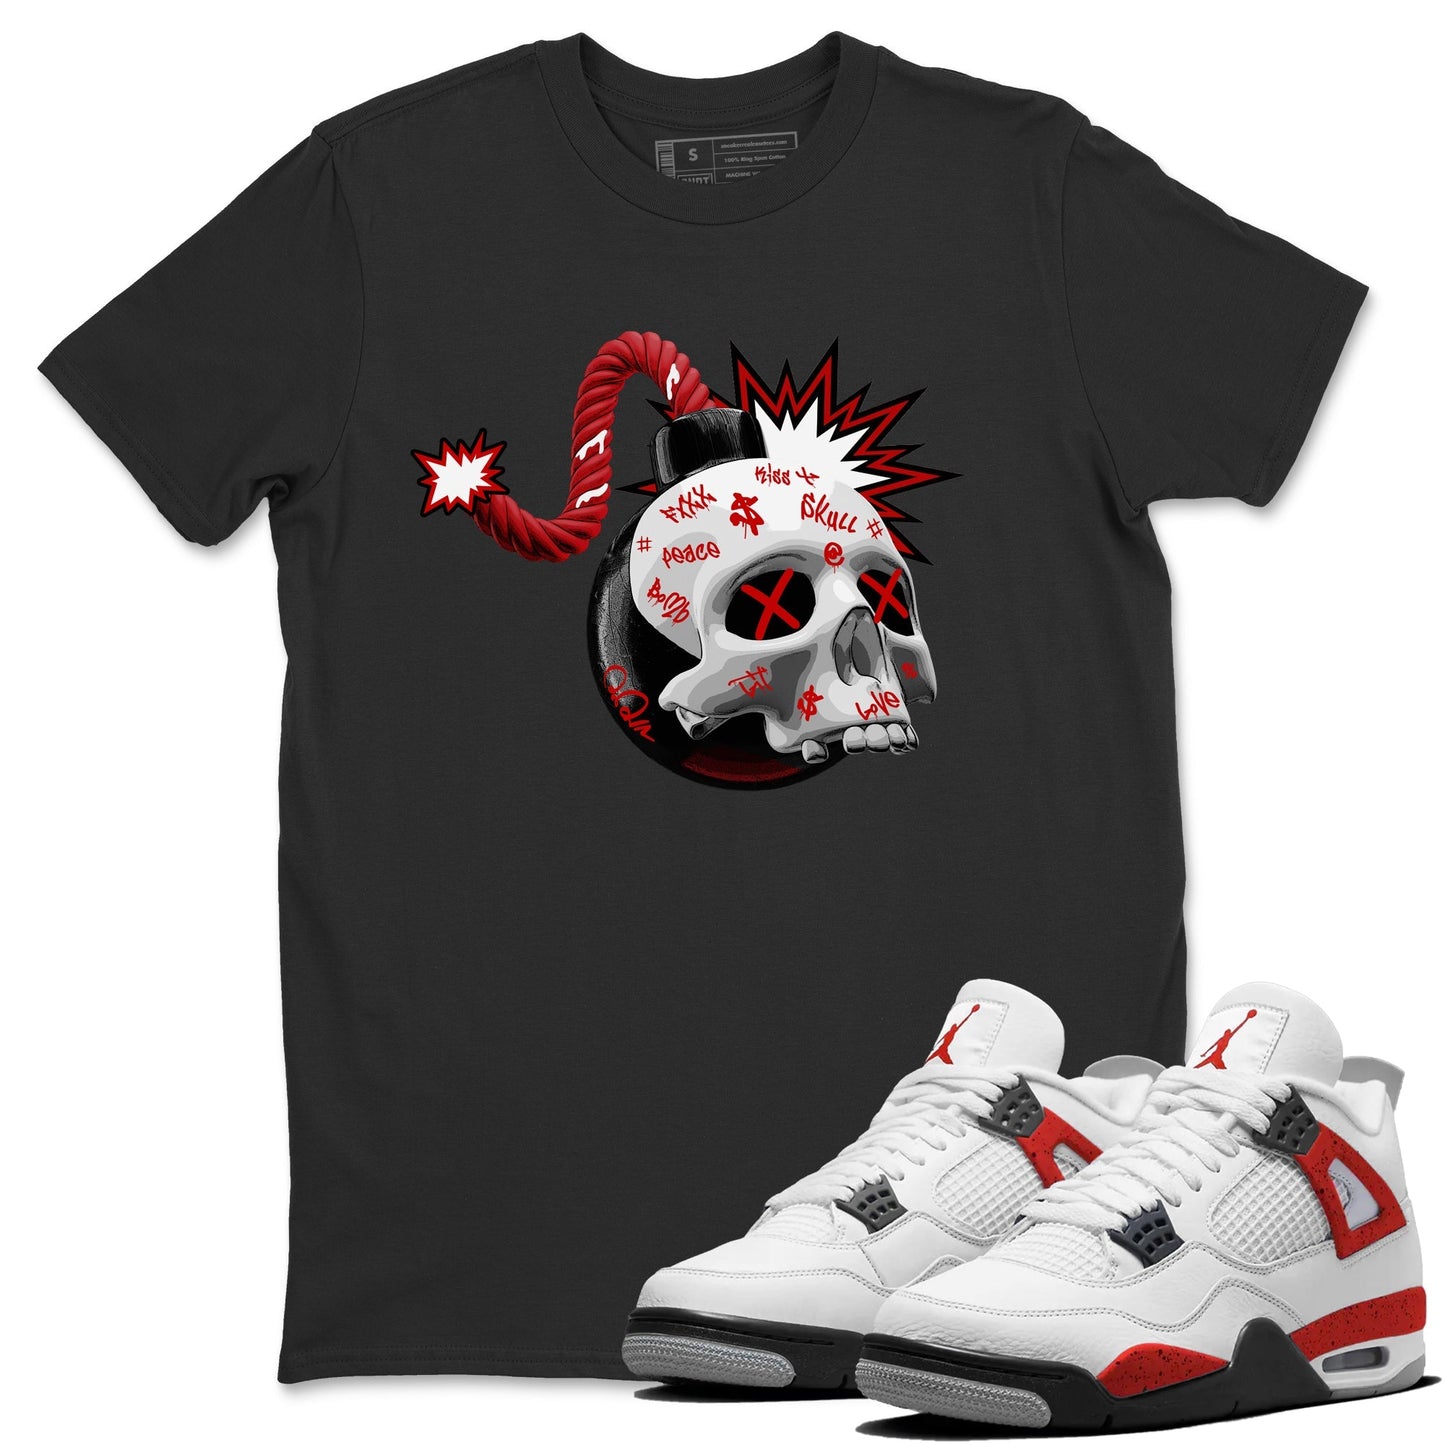 Air Jordan 4 Red Cement Sneaker Match Tees Skull Bomb Sneaker Tees AJ4 Retro OG Red Cement Sneaker Release Tees Unisex Shirts Black 1